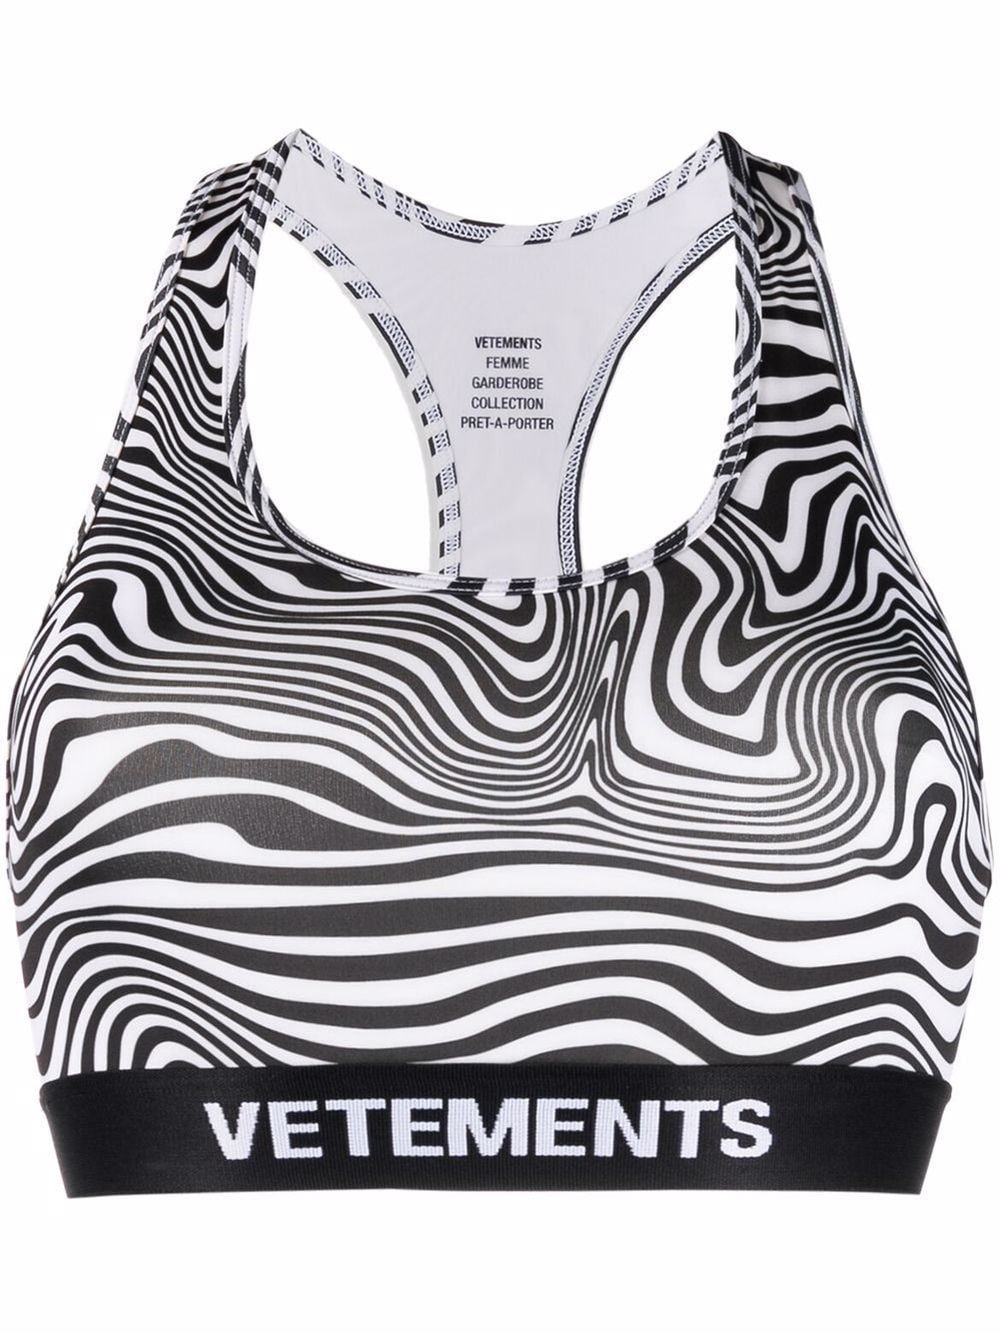 zebra-print bra top, VETEMENTS